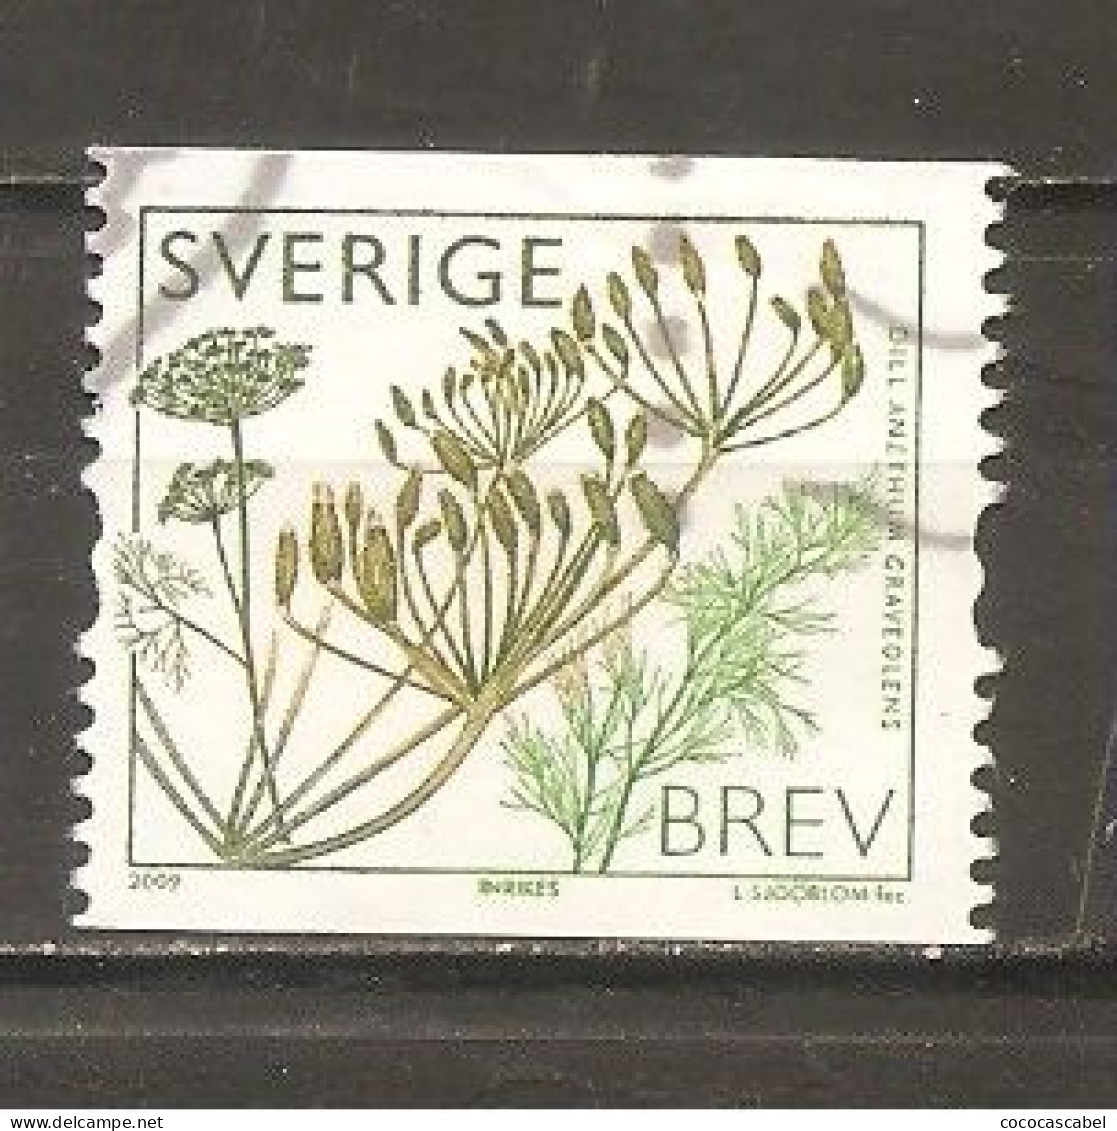 Suecia-Sweden Nº Yvert  2701 (usado) (o) - Gebruikt